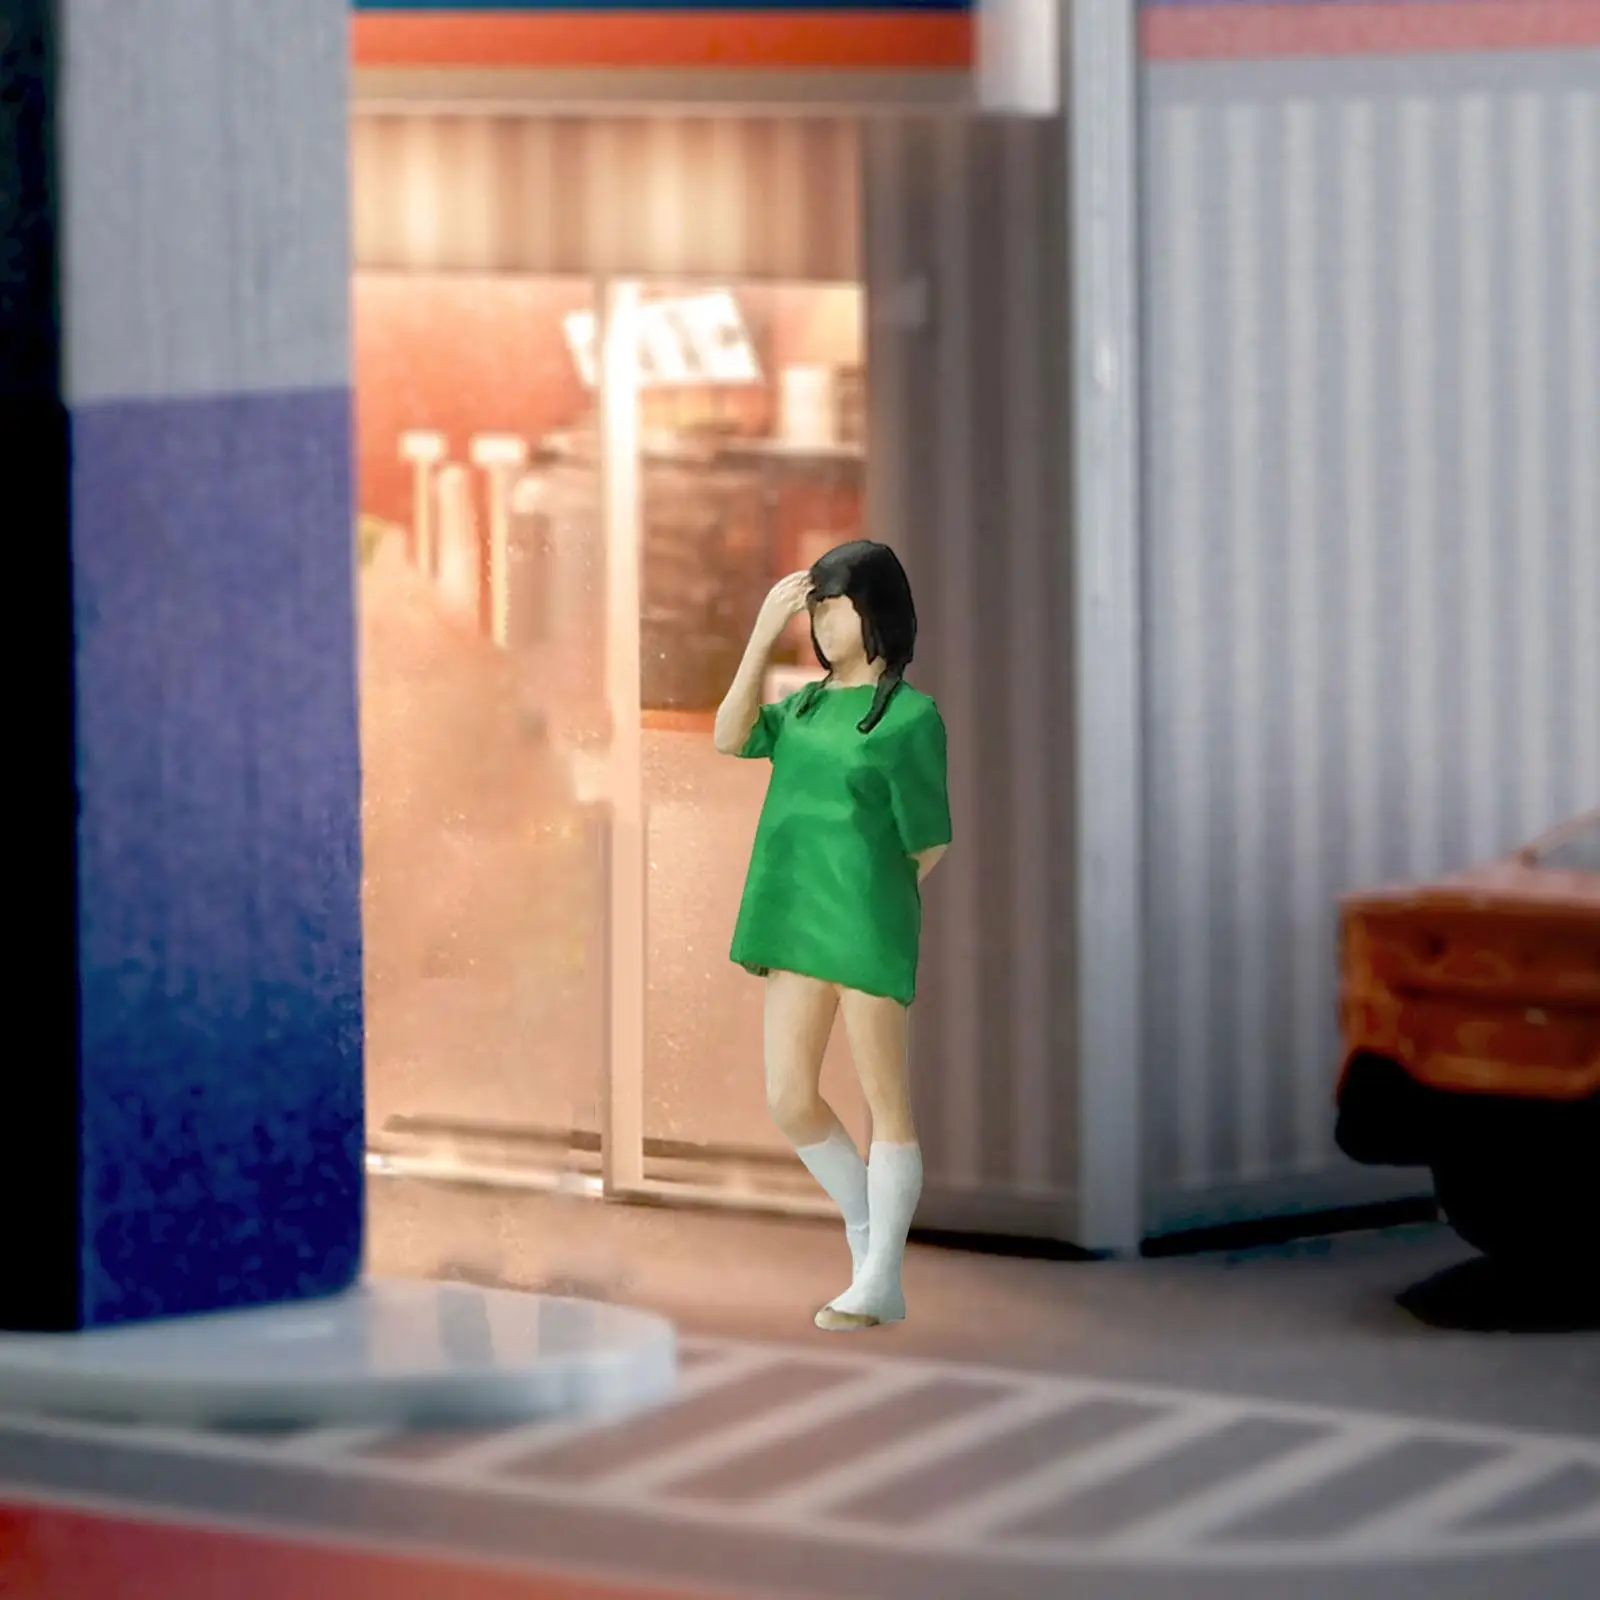 1:64 People Figures Trains Architectural People Figures Miniature People Figurines for Dollhouse Miniature Scene Accessories